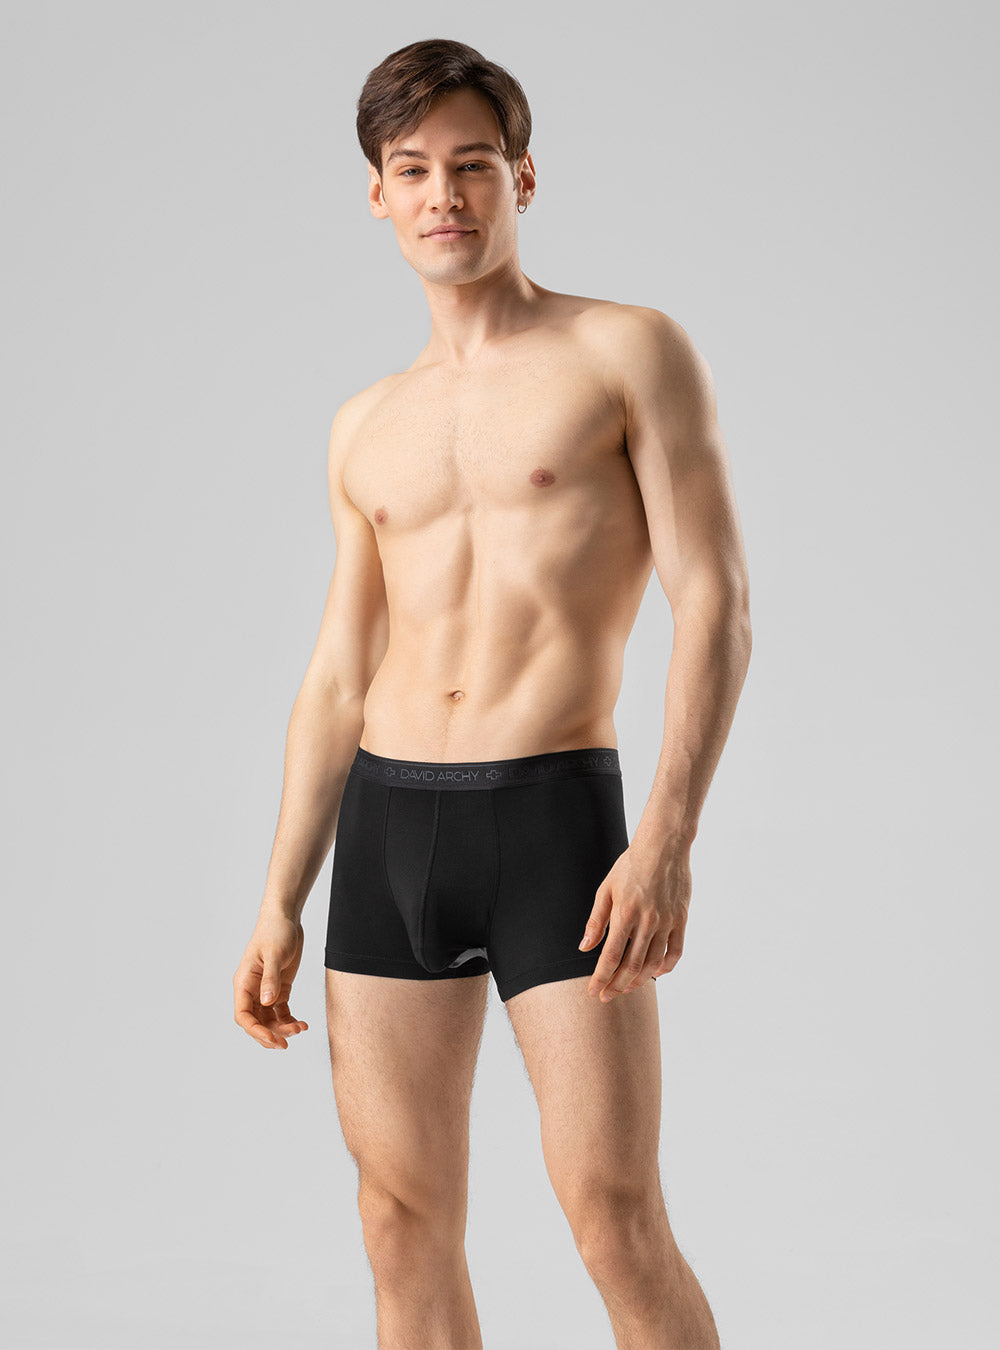 Men Underwear - TRUNKS  Modal, Super soft and Comfortable – ROUC